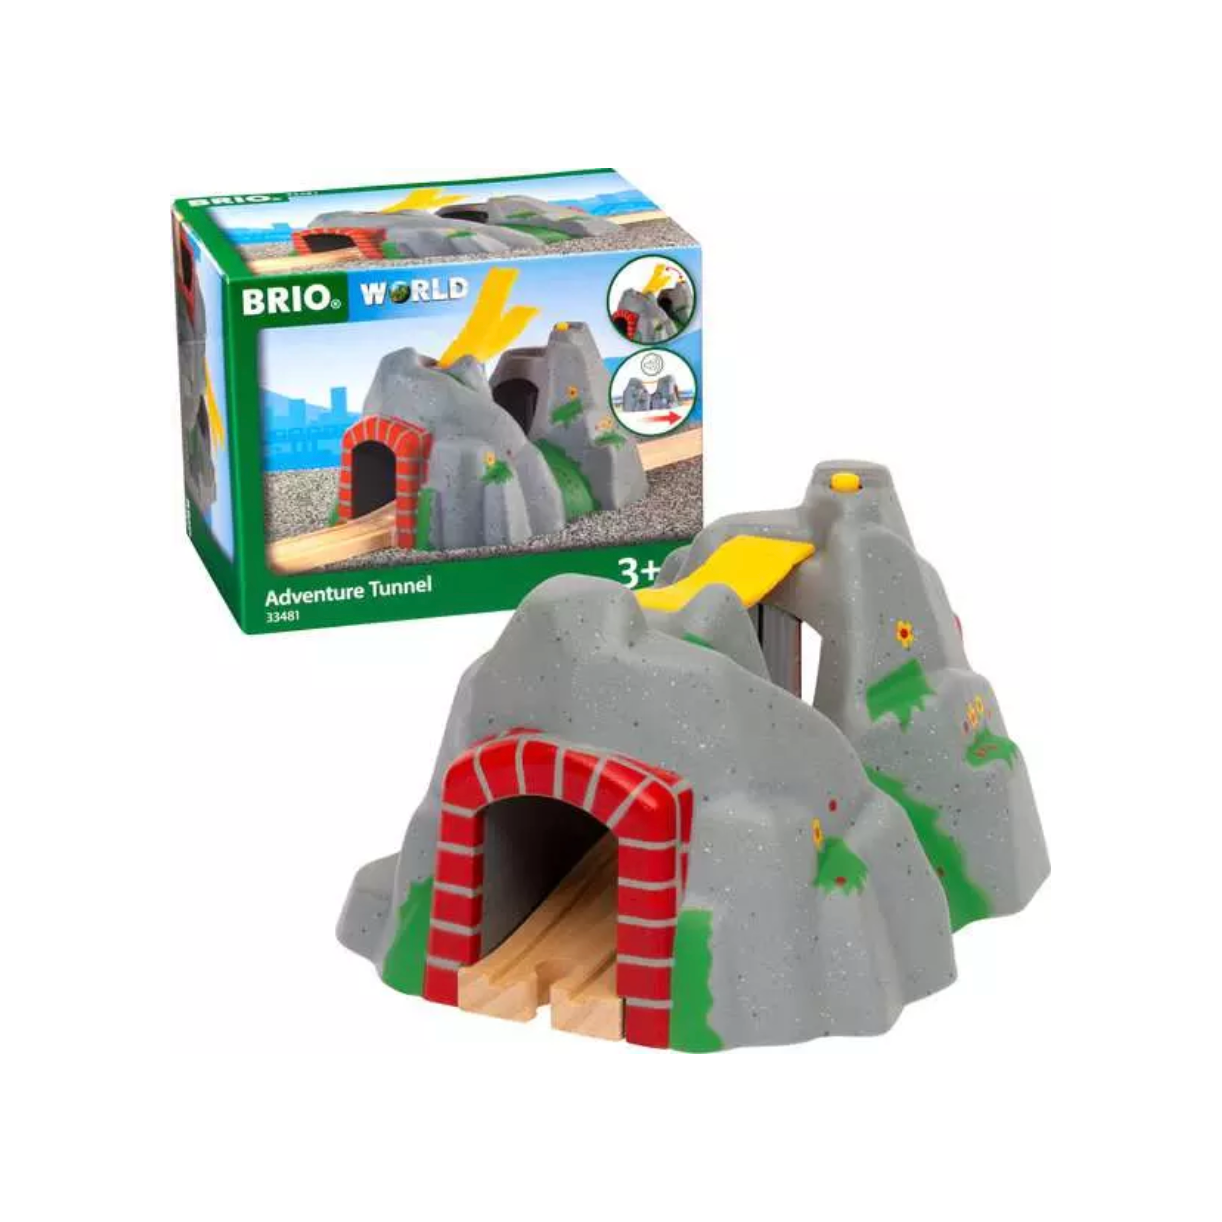 Brio Special Edition 2021 Train - Cheeky Monkey Toys